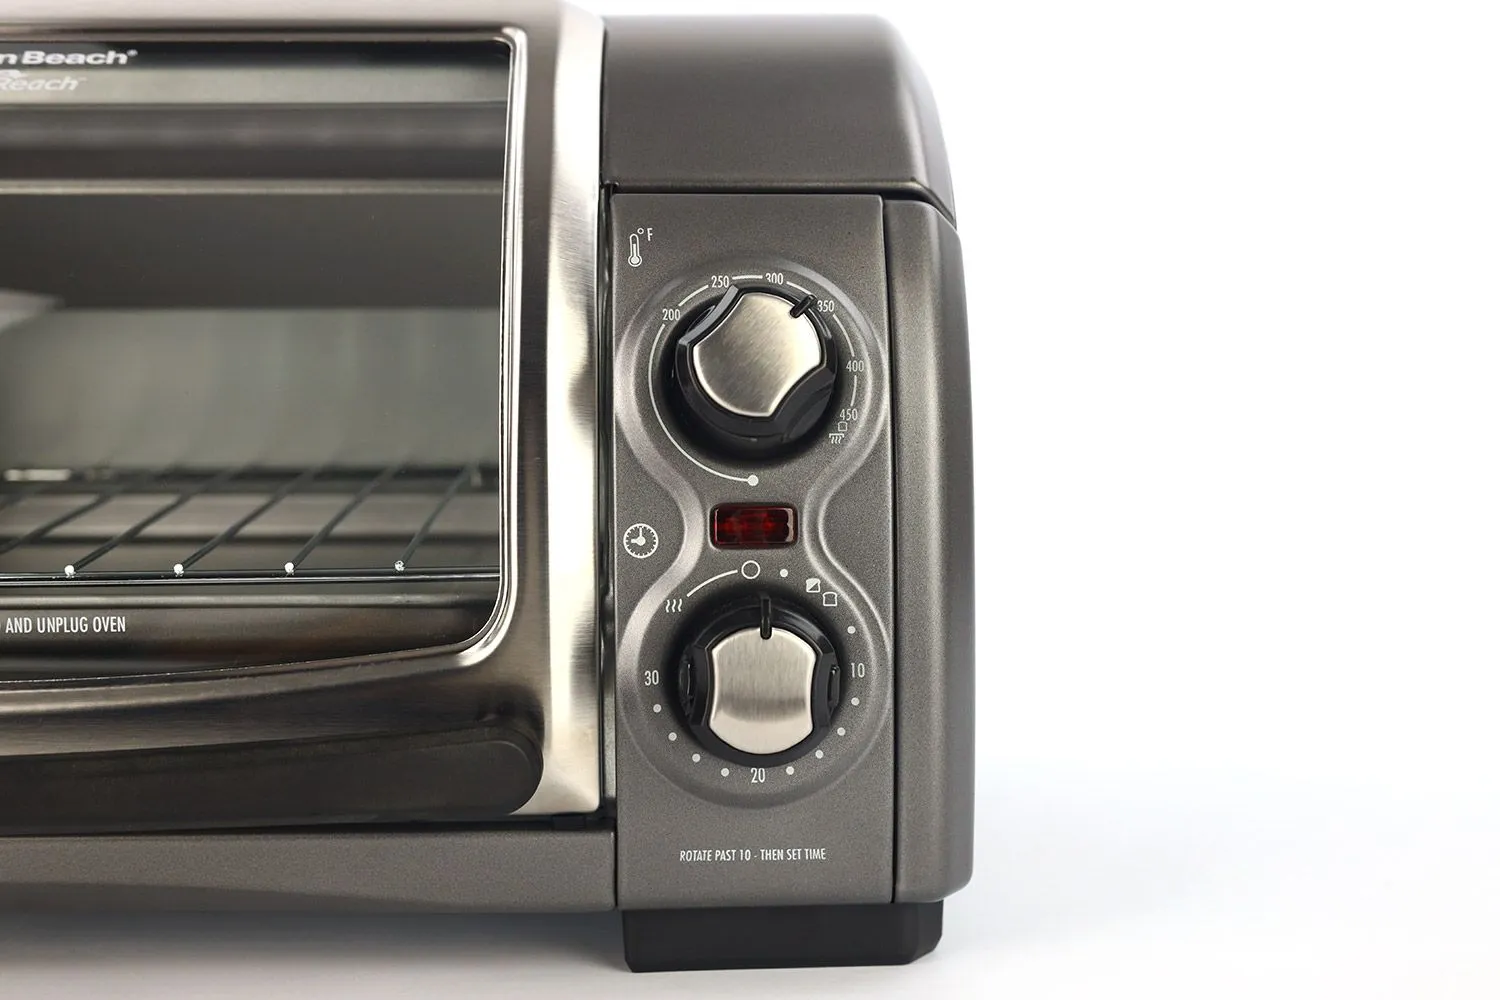 Hamilton Beach Easy Reach 4 Slice Toaster Oven Review – Felt Like a Foodie